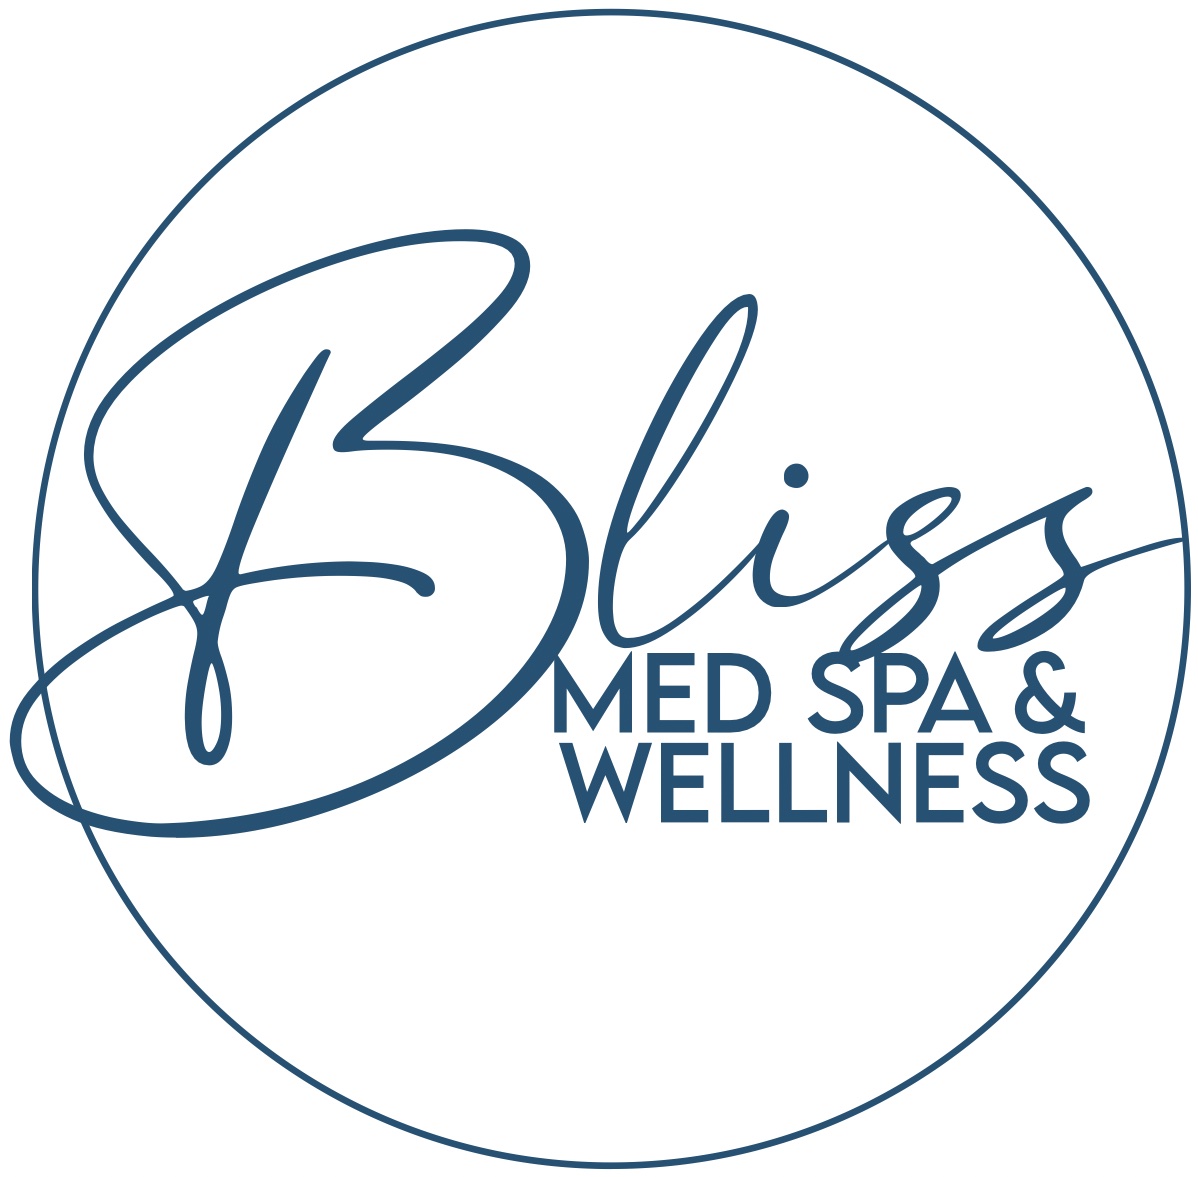 Bliss Med Spa & Wellness  Beauty & Spa Treatments in Orlando